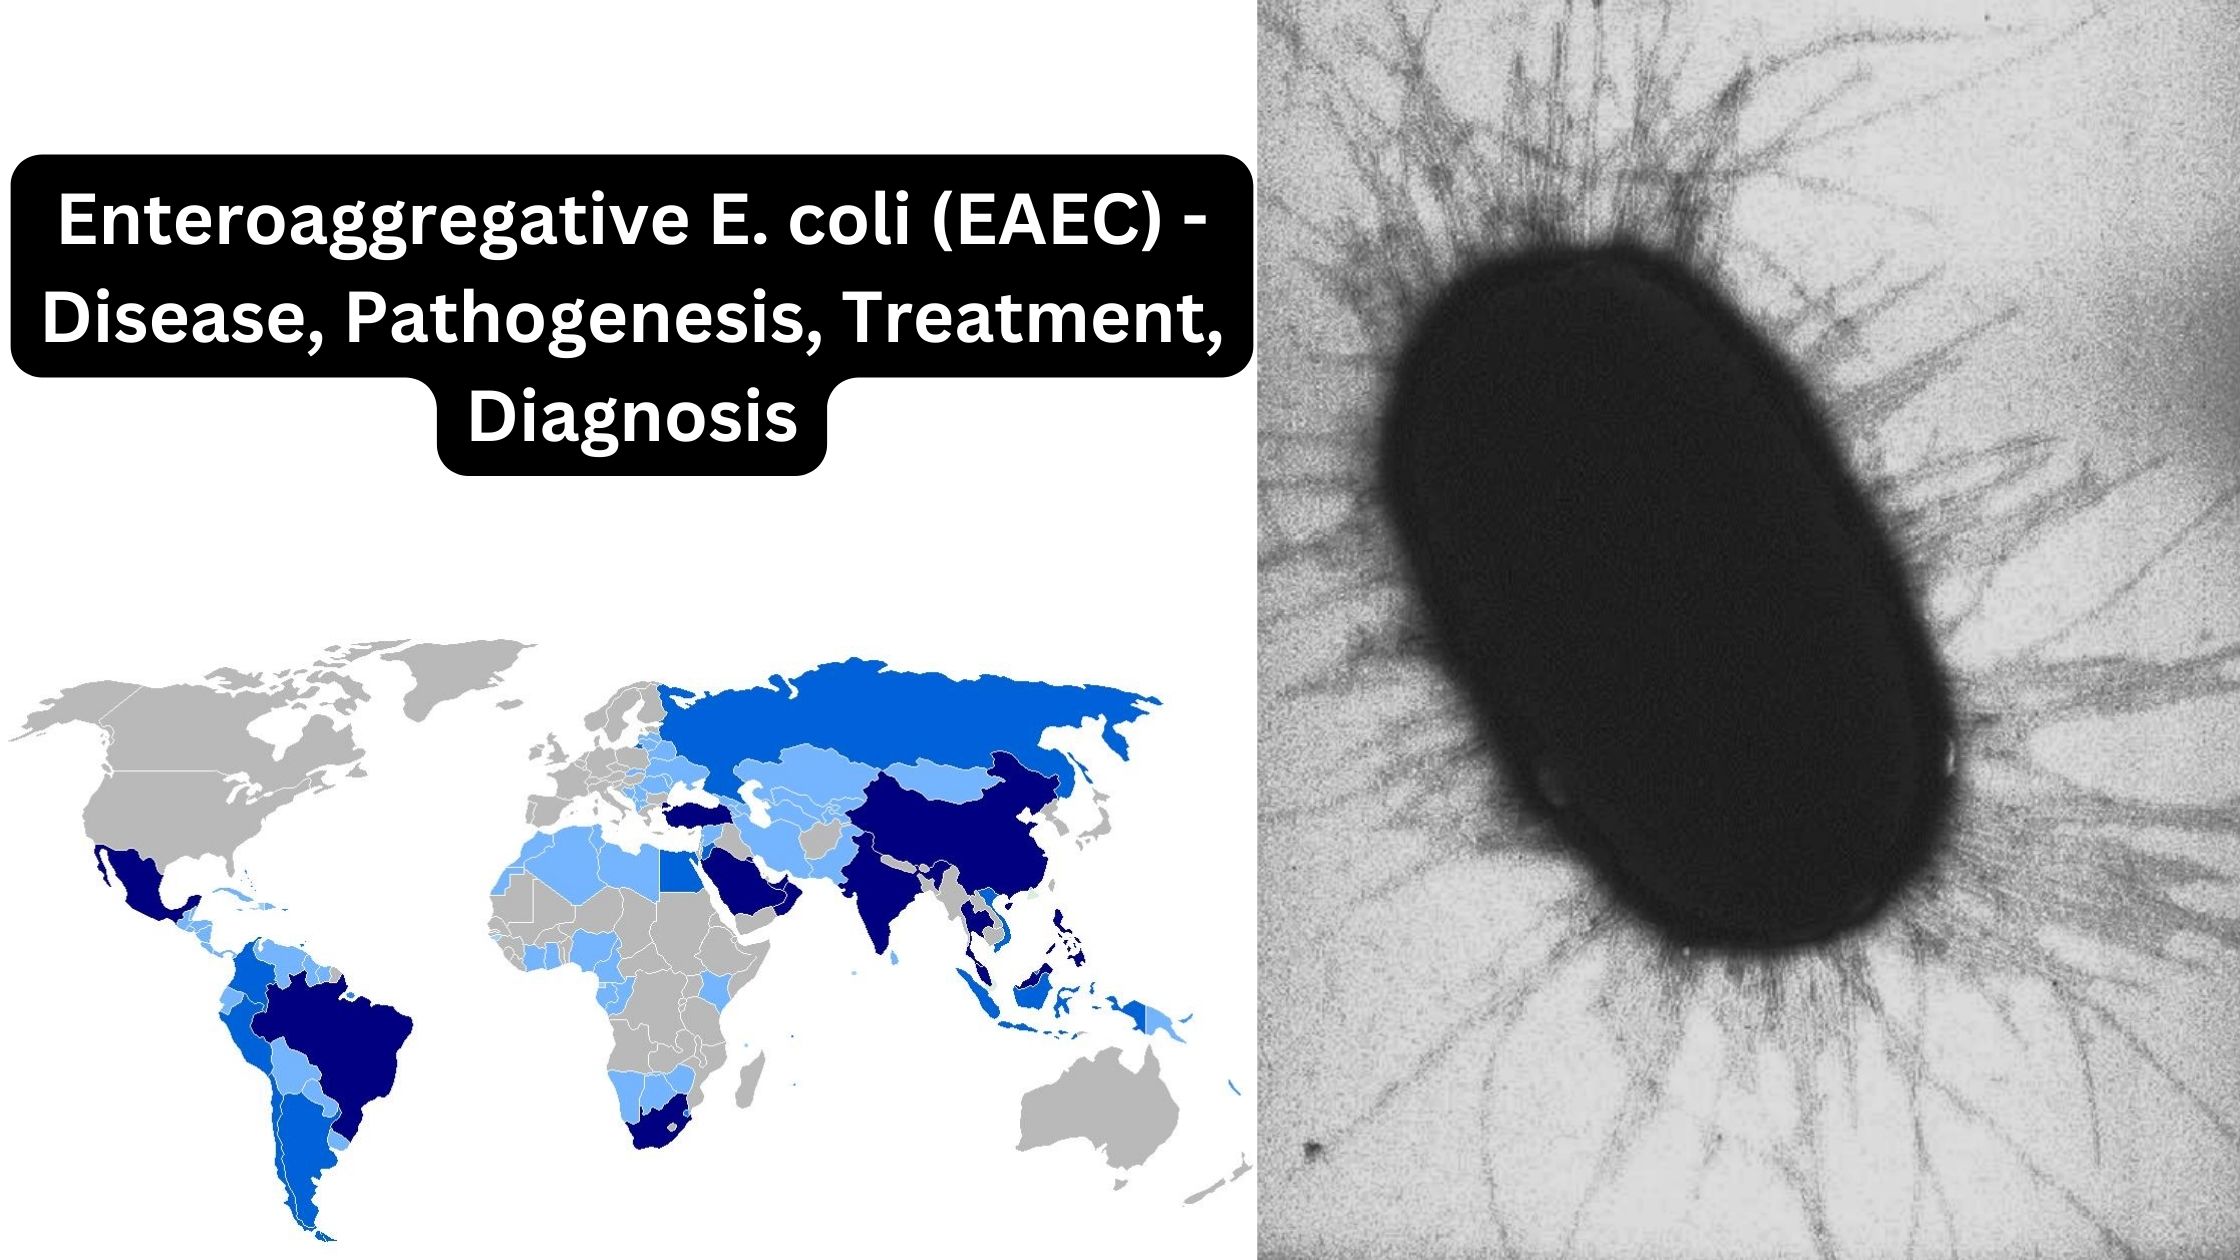 Enteroaggregative E. coli (EAEC) - Disease, Pathogenesis, Treatment, Diagnosis